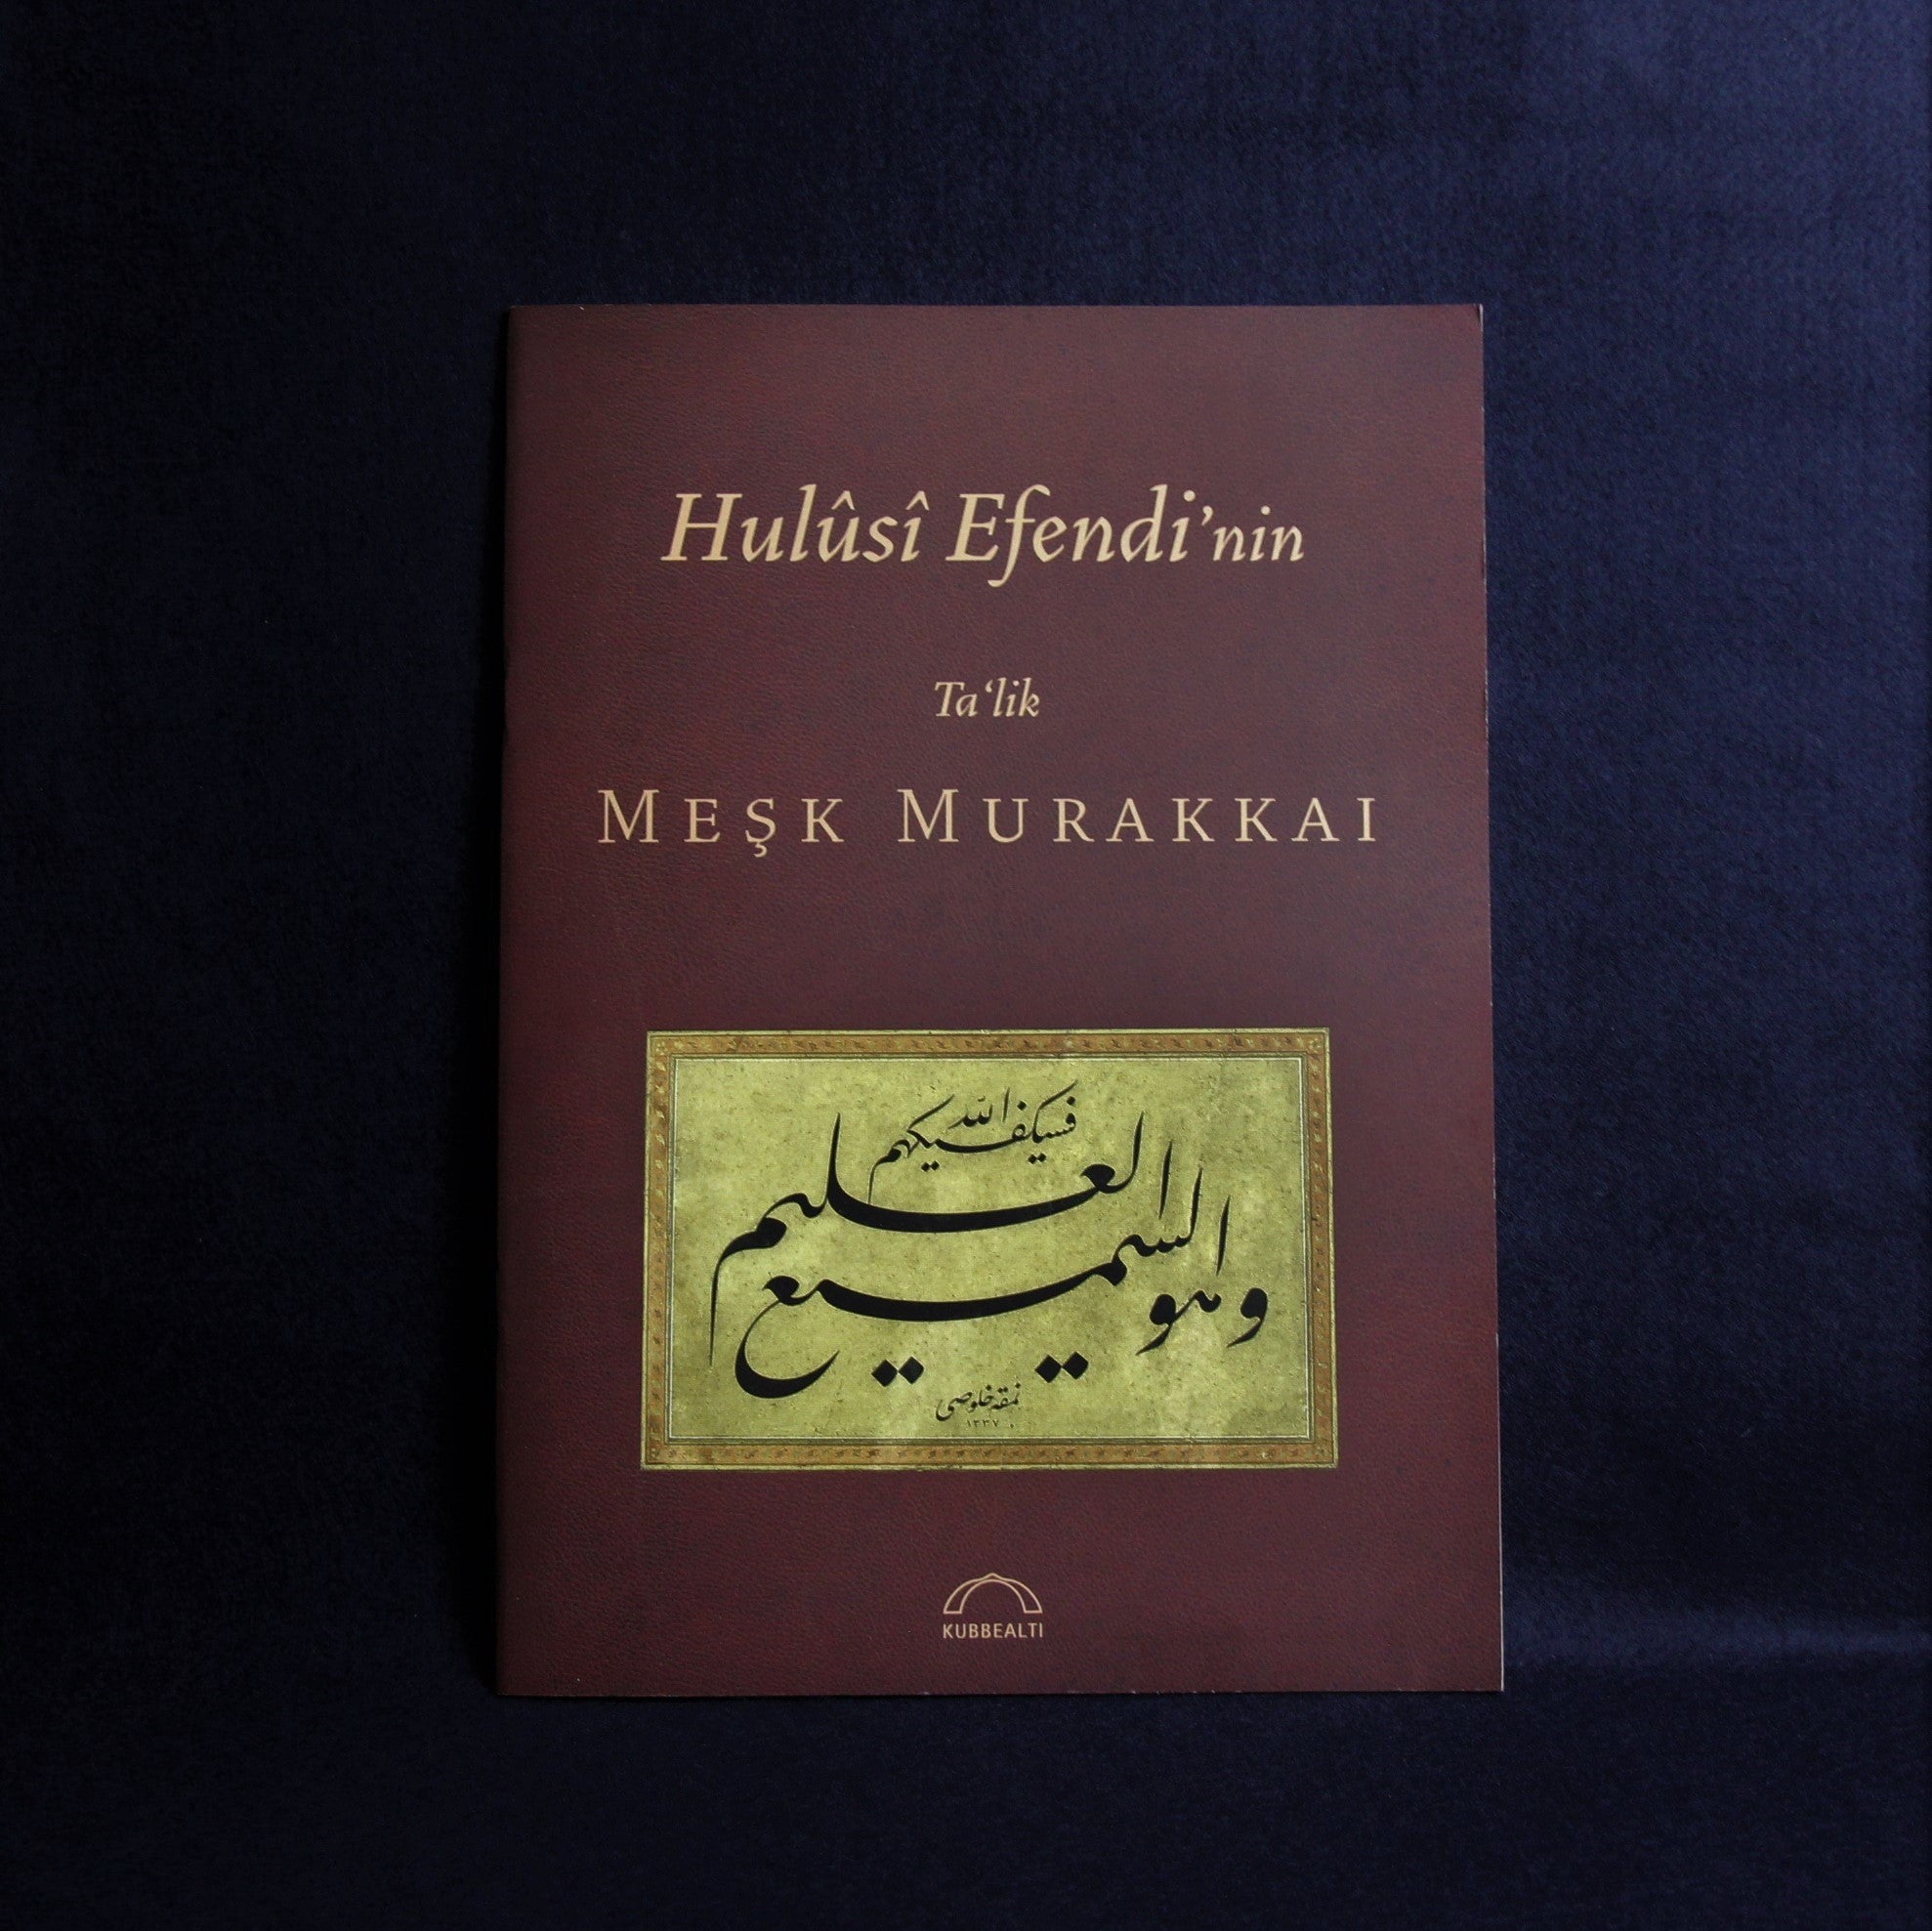 Copy book (mashq) for Turkish Taliq script - based on work of Hulusi Efendi